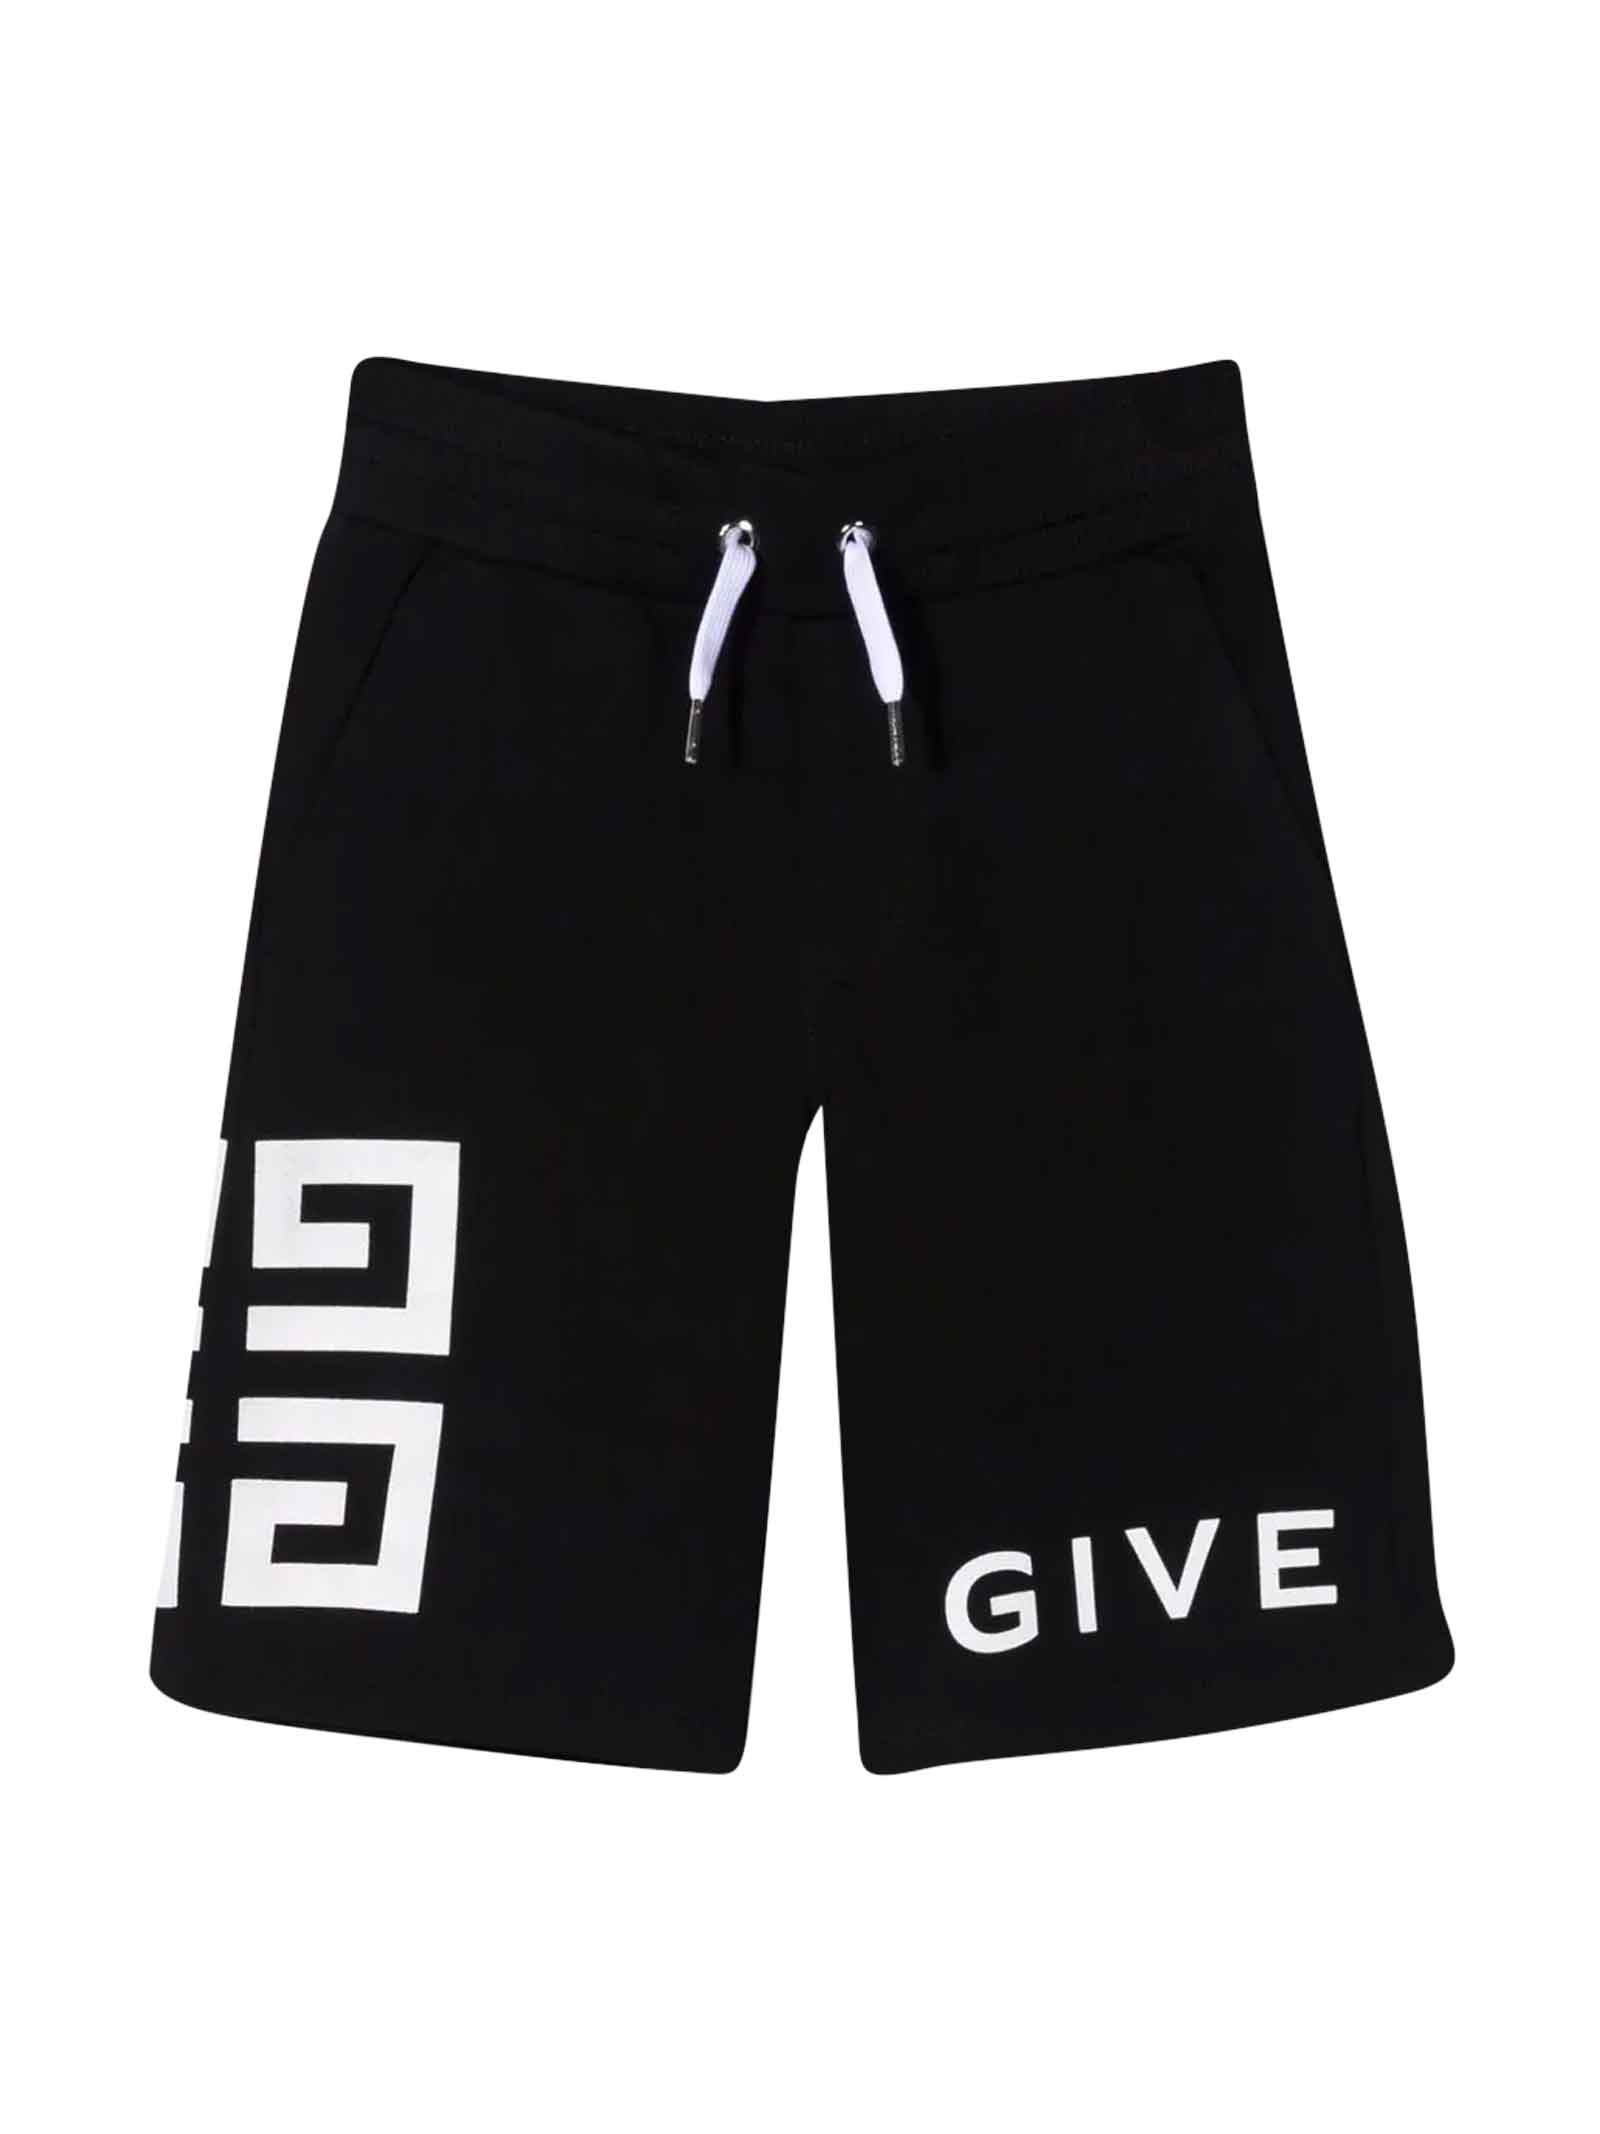 Givenchy Black Bermuda Shorts With White Print